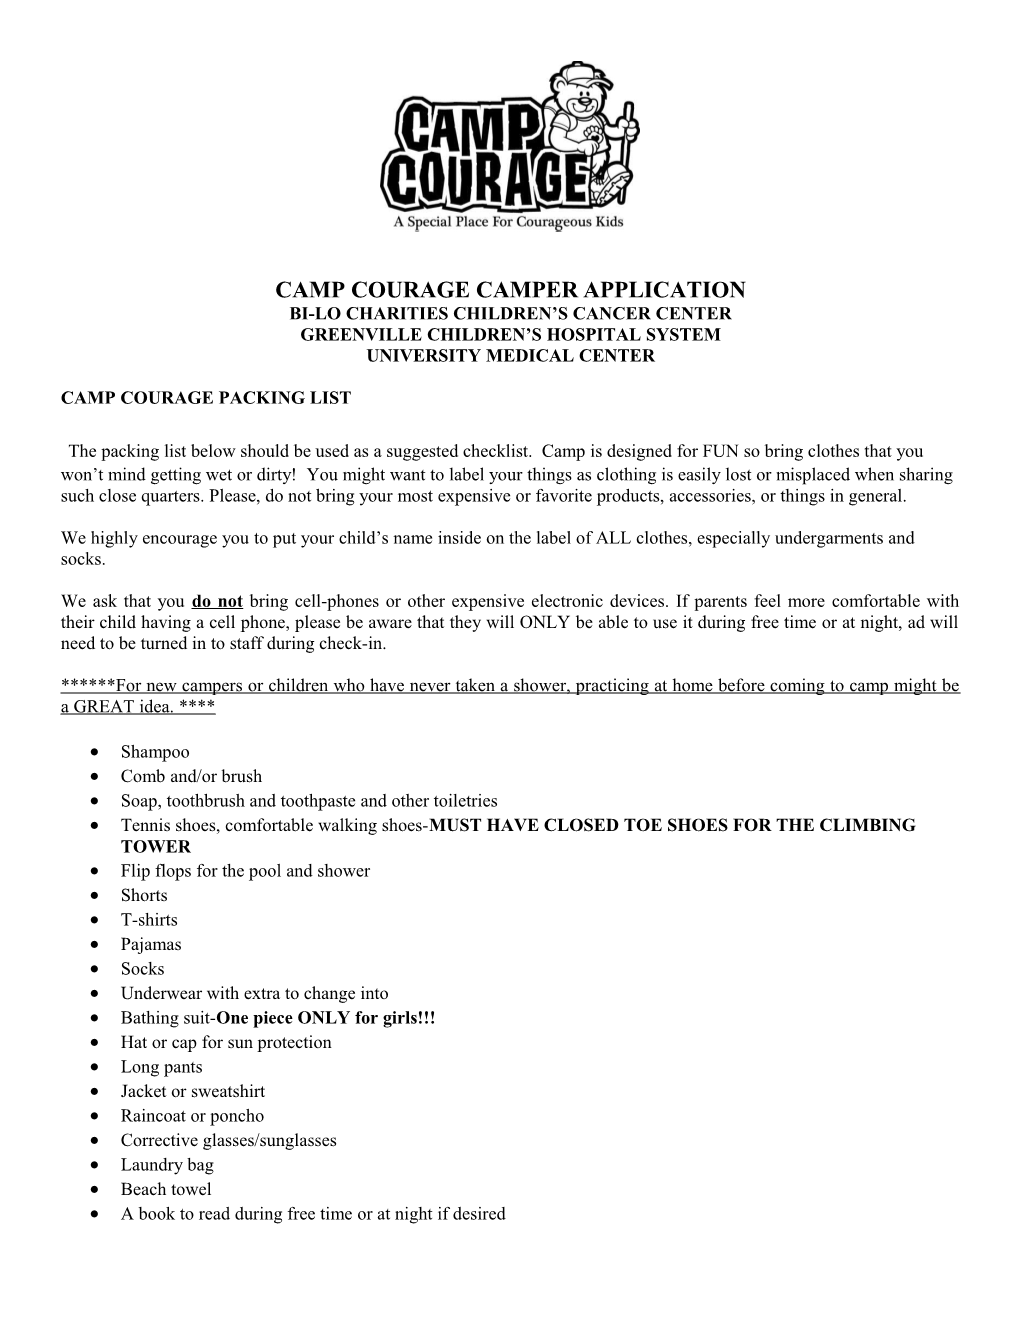 Camp Courage Camper Application